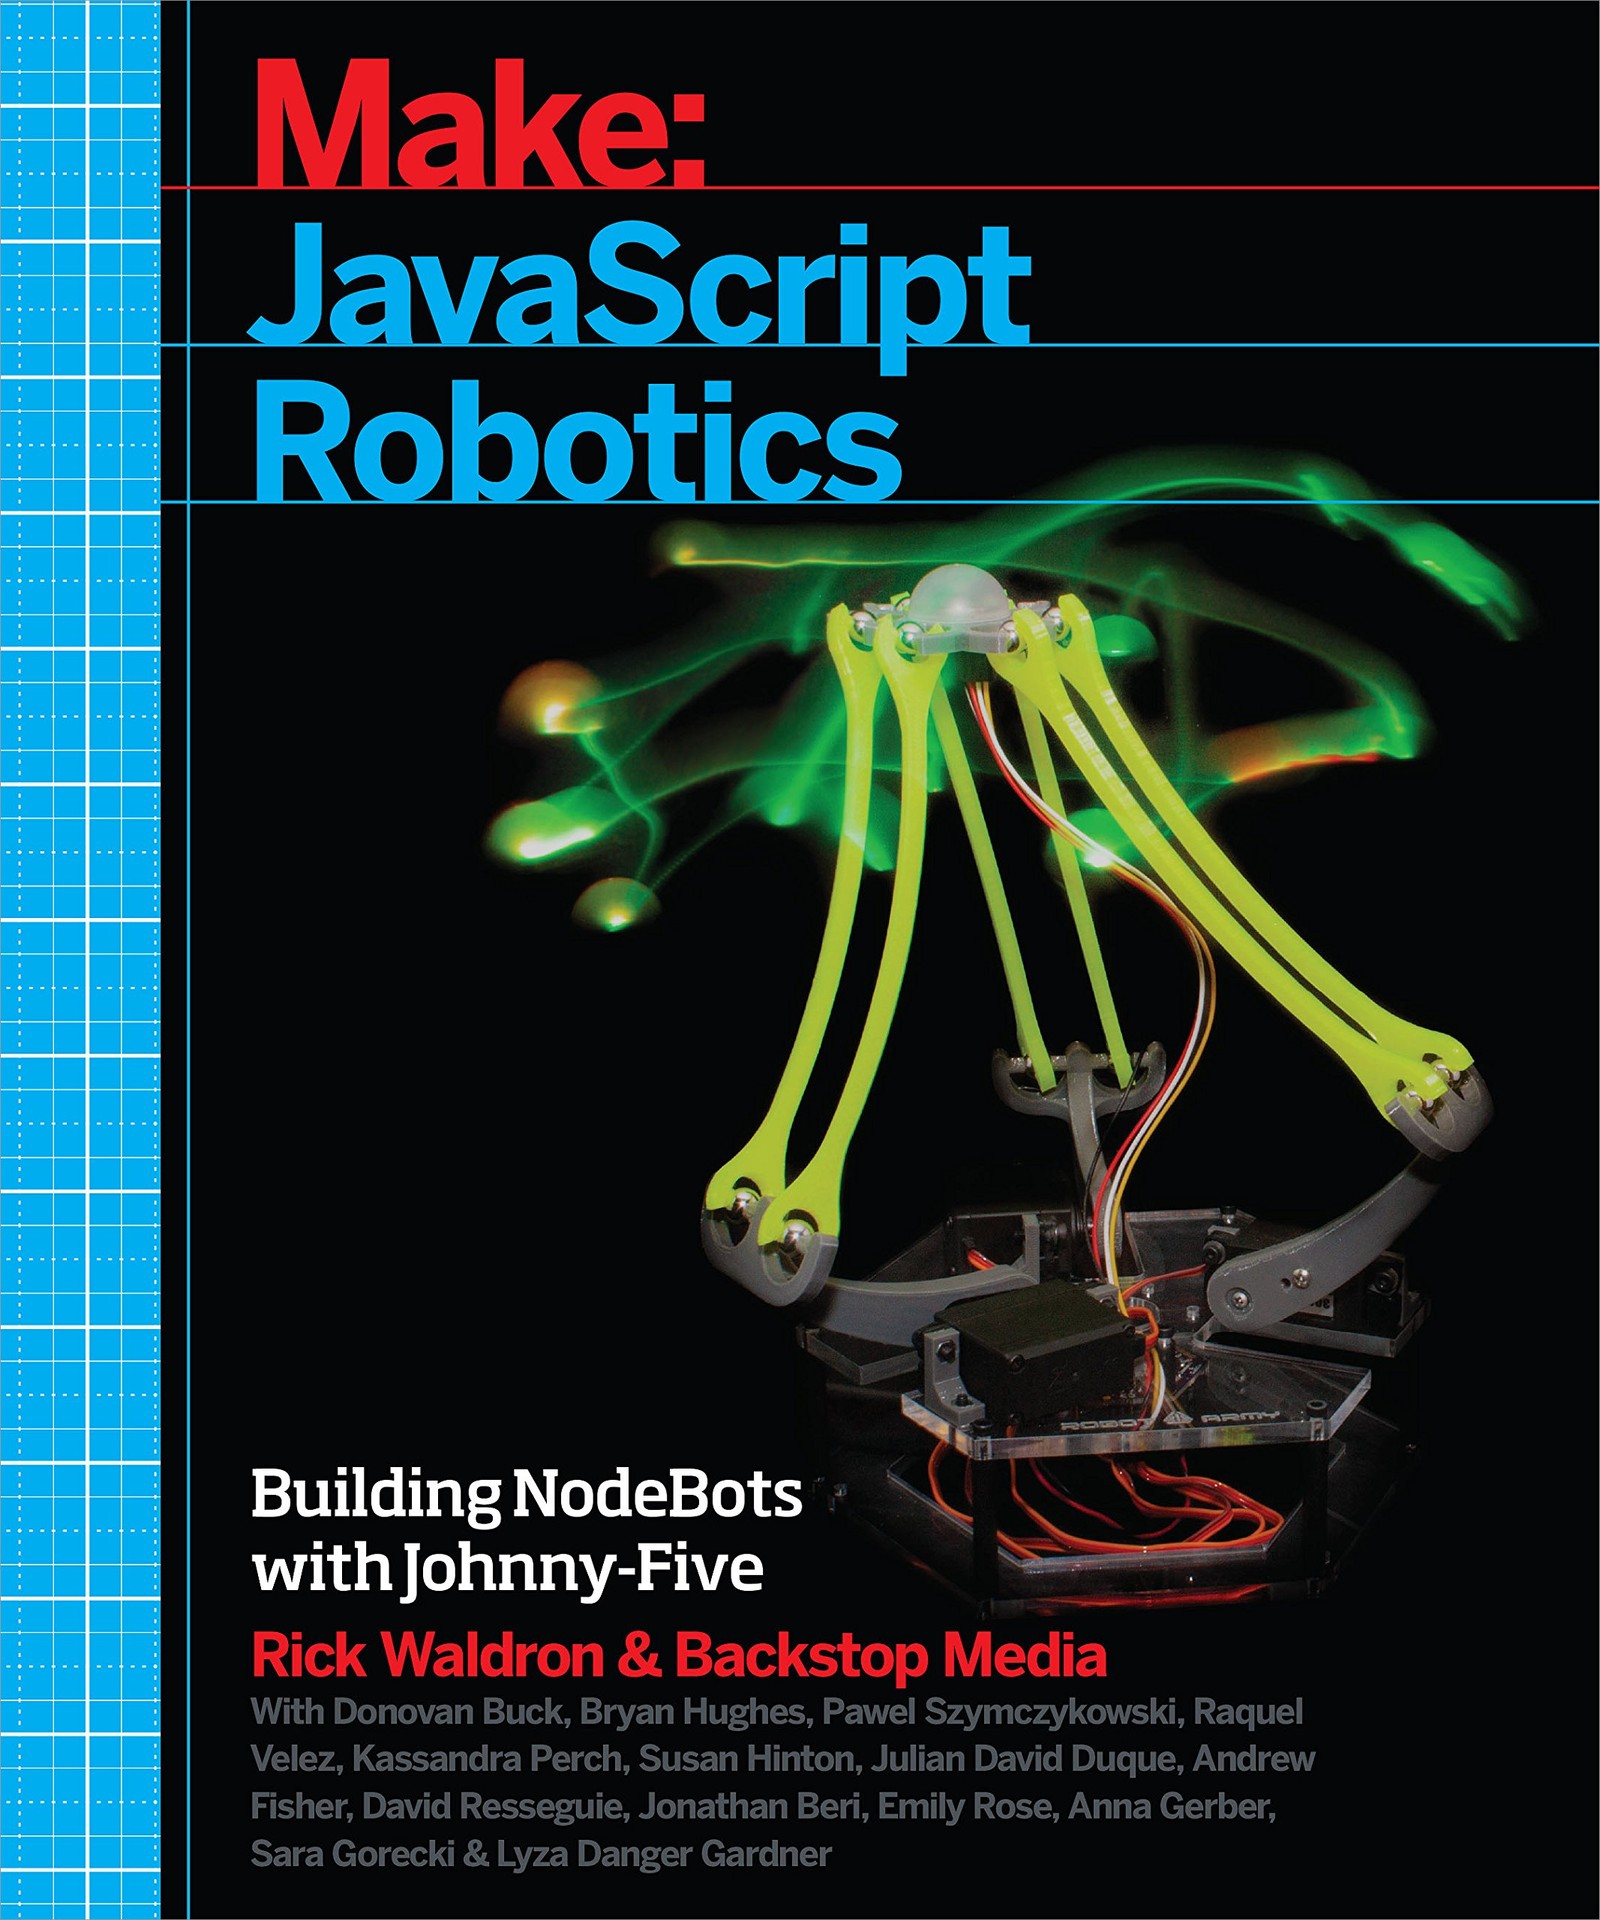 Book launch of Make: JavaScript Robotics